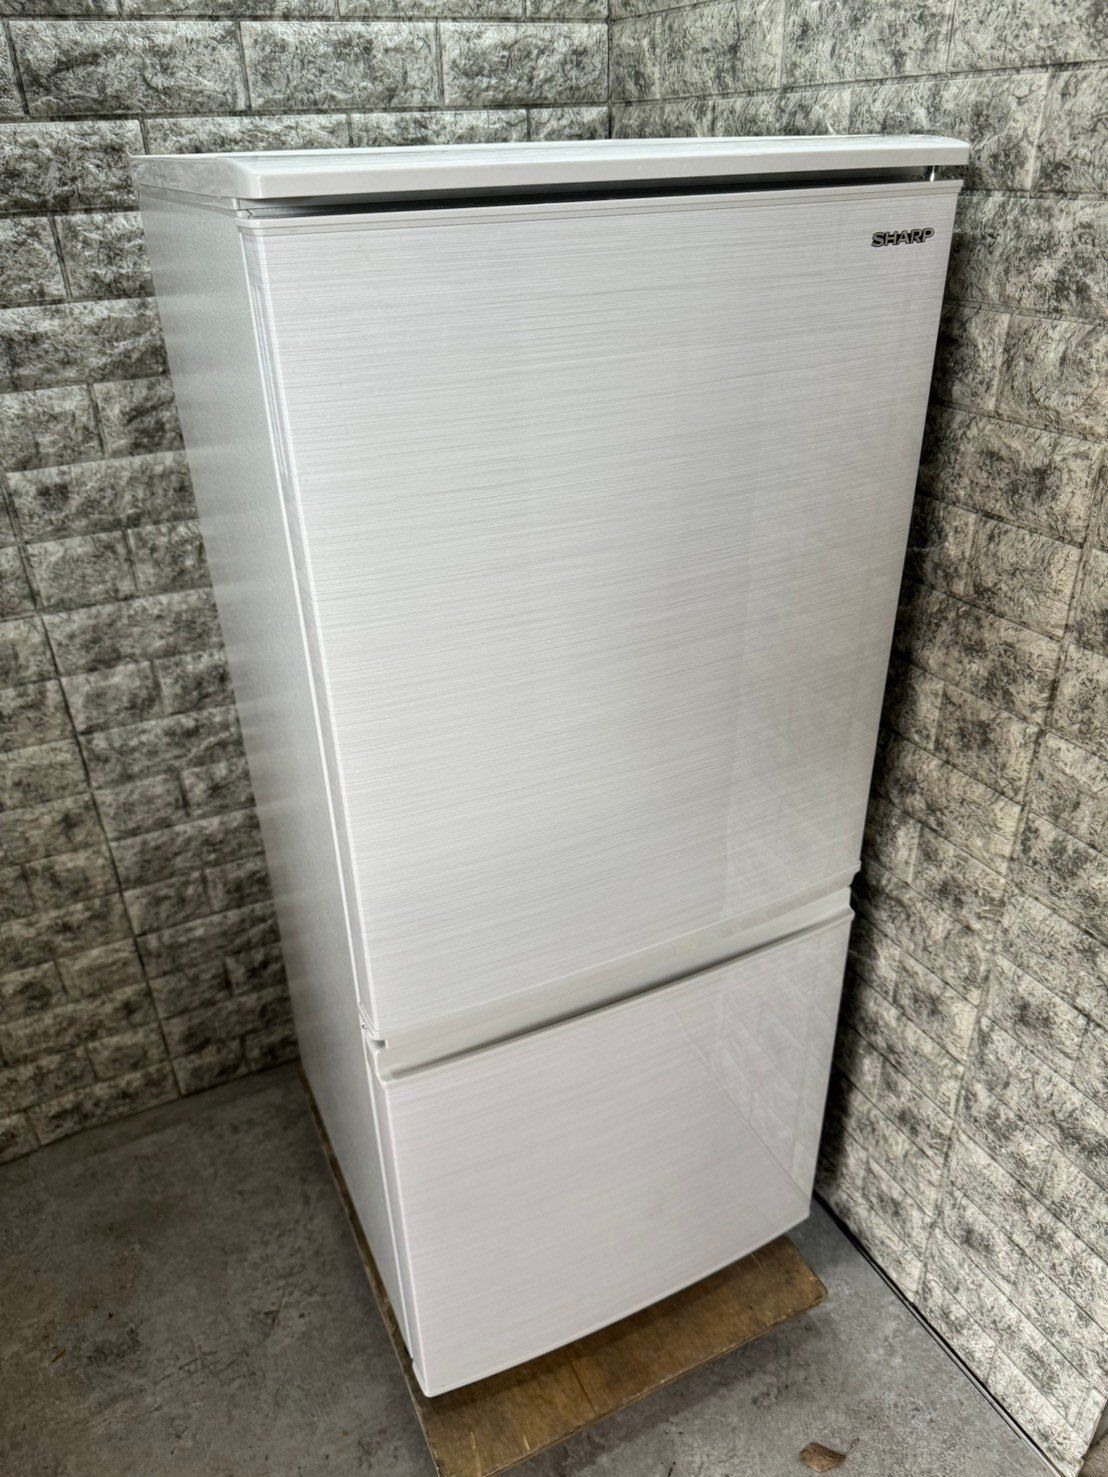 超特価通販全国送料無料3か月保障付き冷蔵庫2019年式シャープSJ-14E6KW 冷蔵庫・冷凍庫